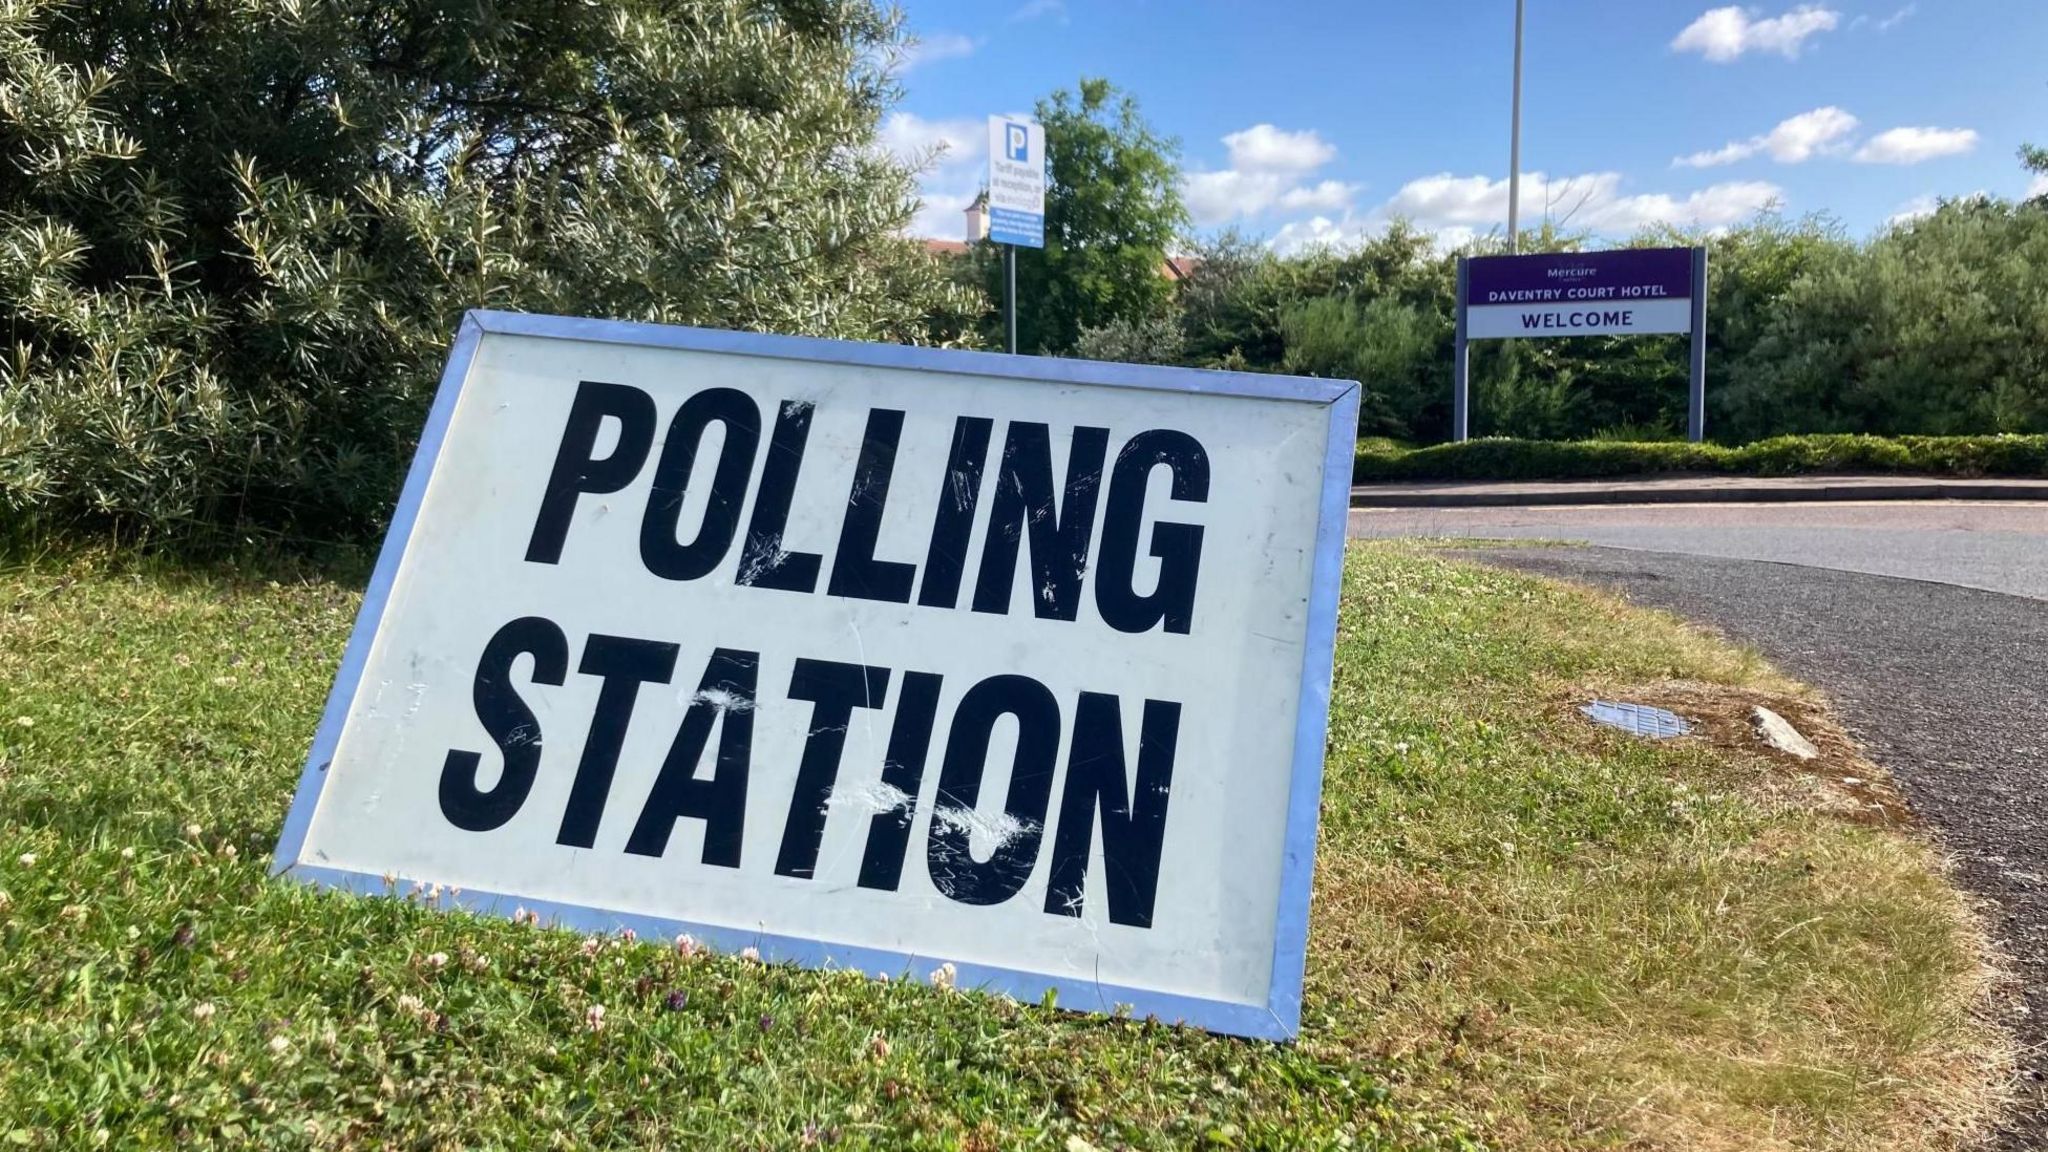 Polling station - Figure 1